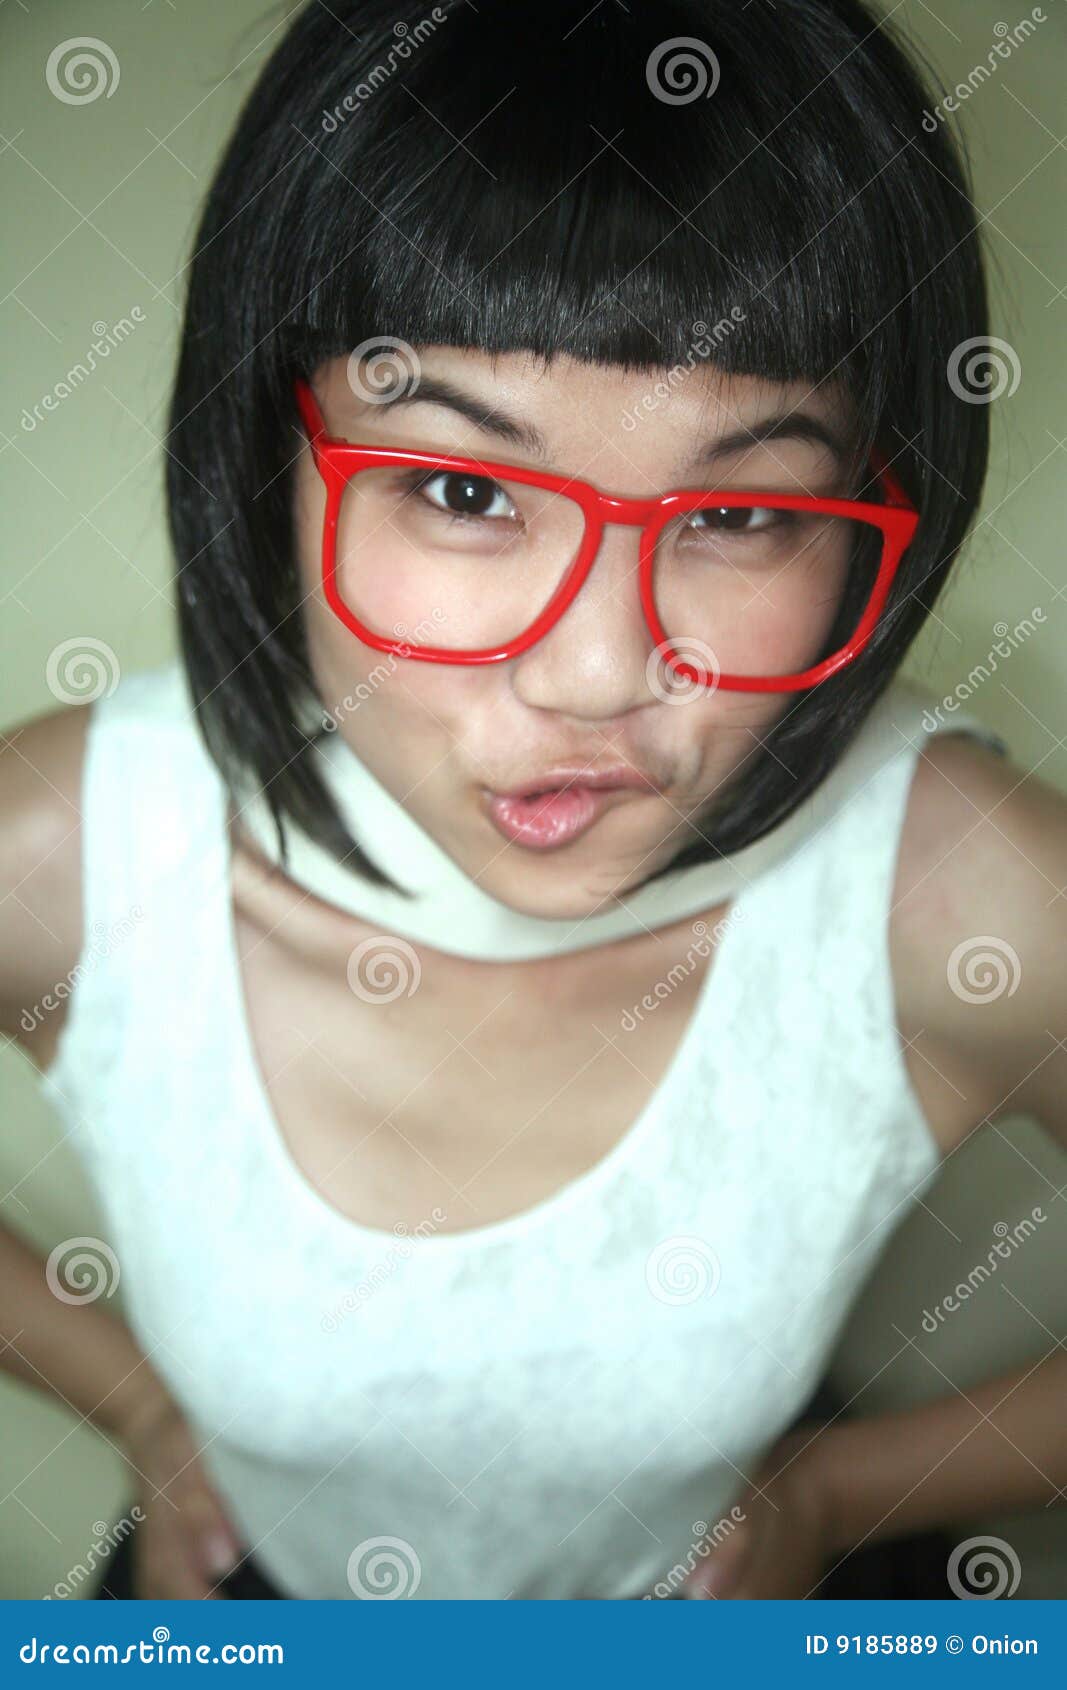 diaconu andreea reccomend cute asian girl glasses pic